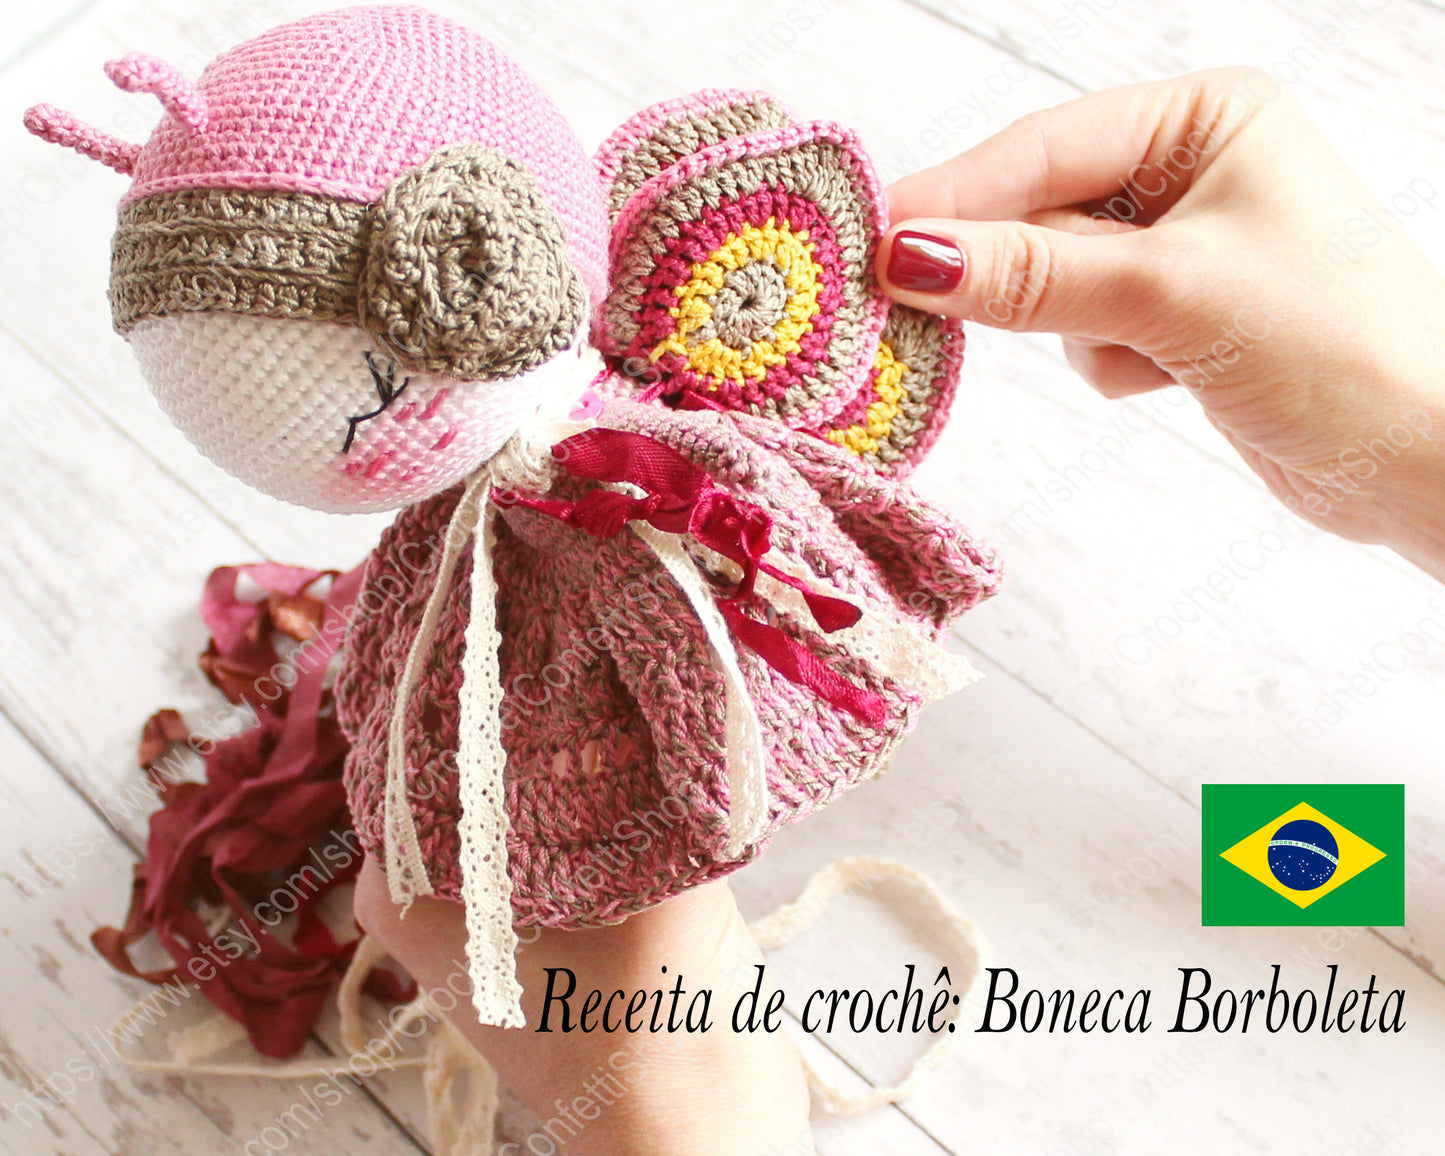 Receita de crochê: Boneca Borboleta BRAZILIAN PORTUGUESE Portugues do Brasil